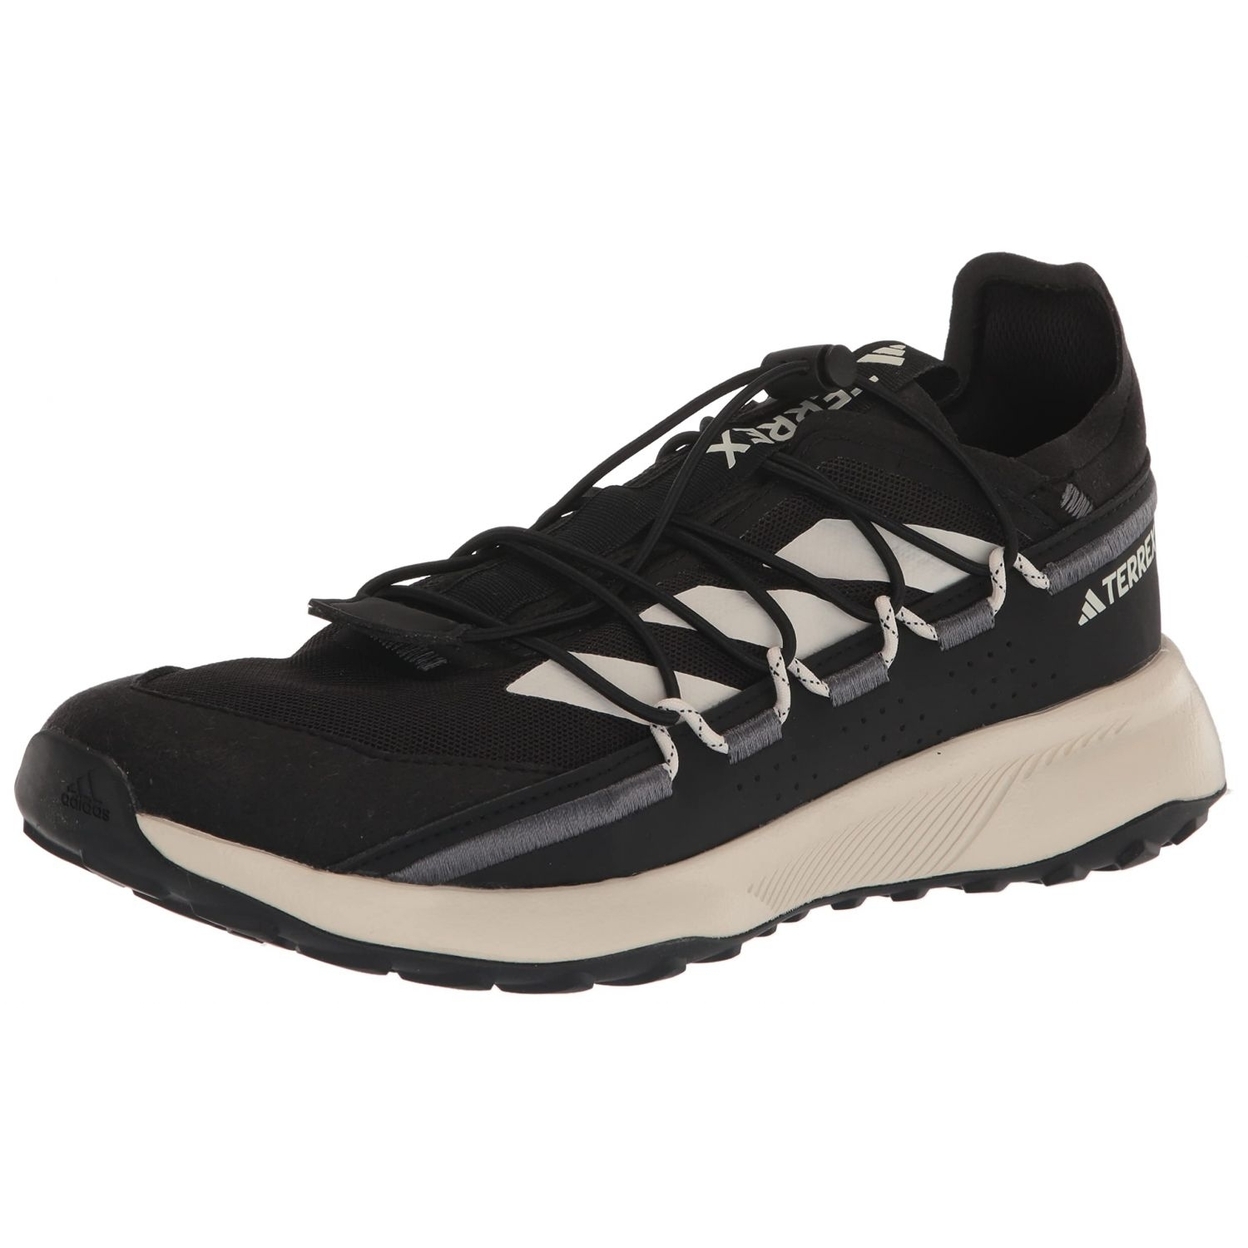 Adidas Women's Terrex Voyager 21 Trail Running Shoe - Hiking Shoe 5 GREY SIX/CORE BLACK/FTWR WHITE - GREY SIX/CORE BLACK/FTWR WHITE, 8.5